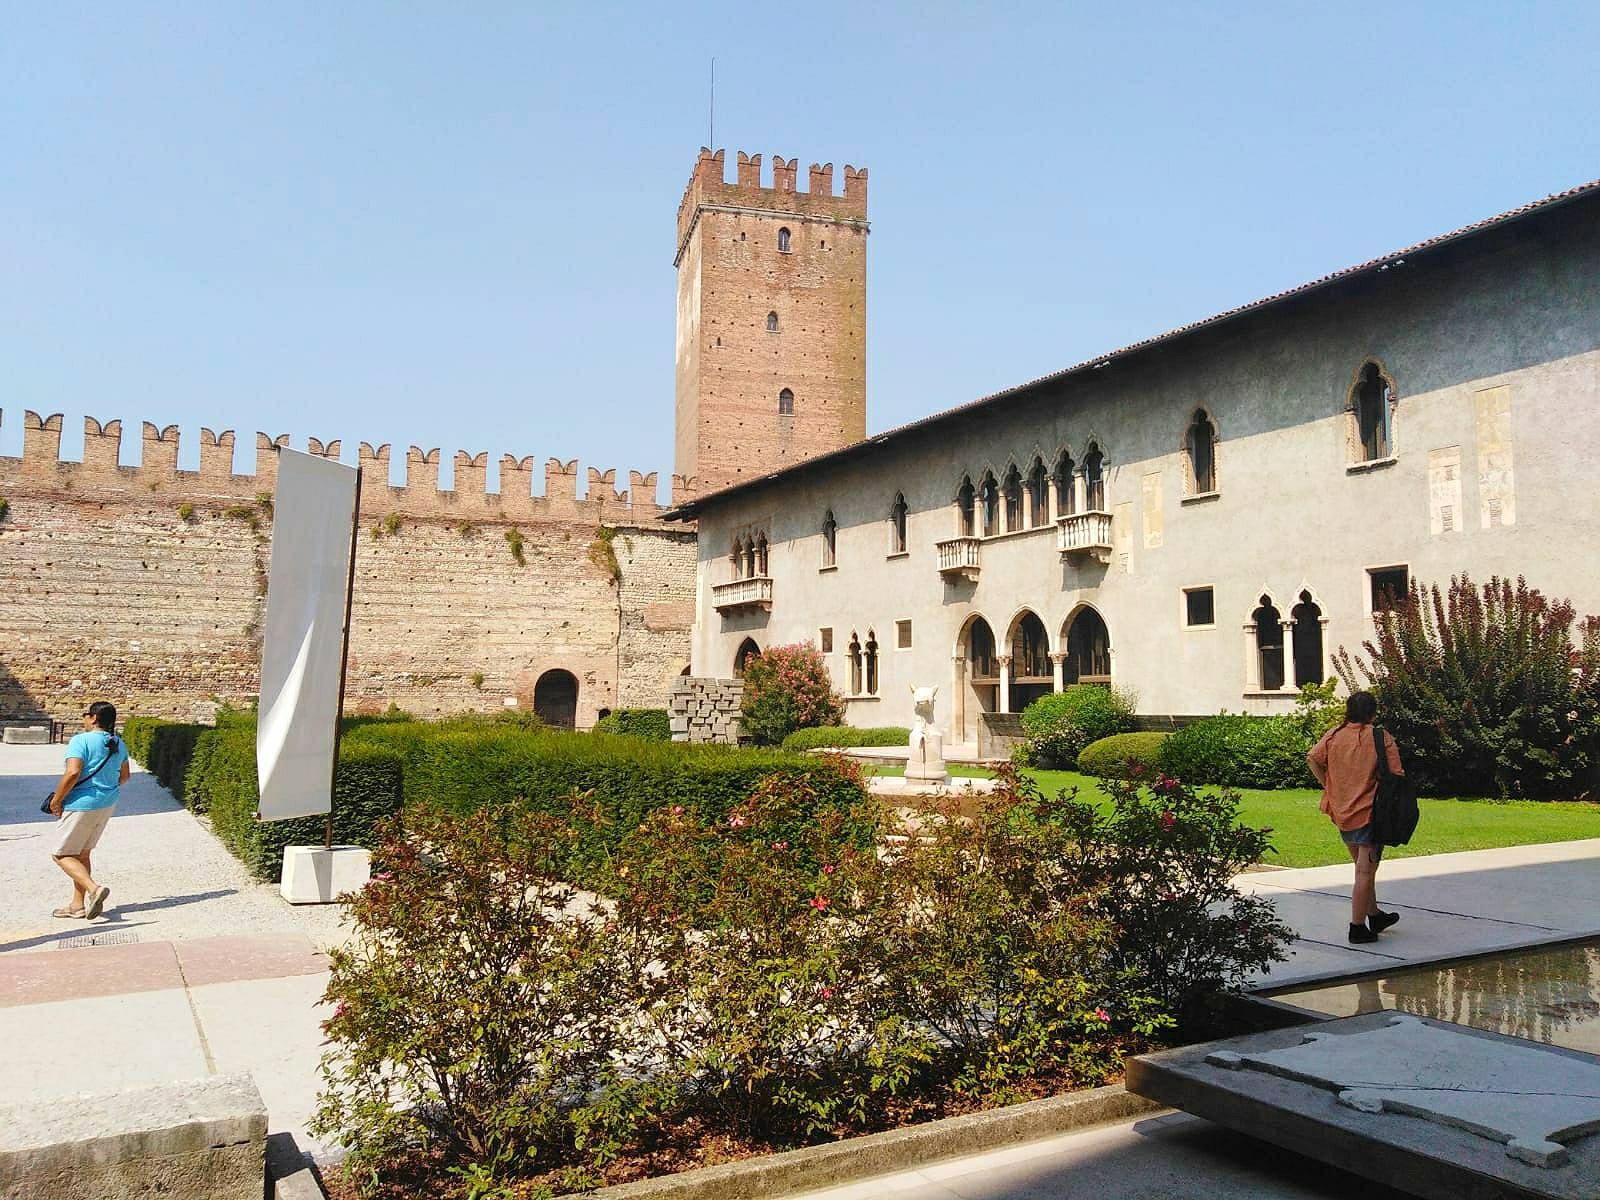 The inner courtyard of the Castelvecchio